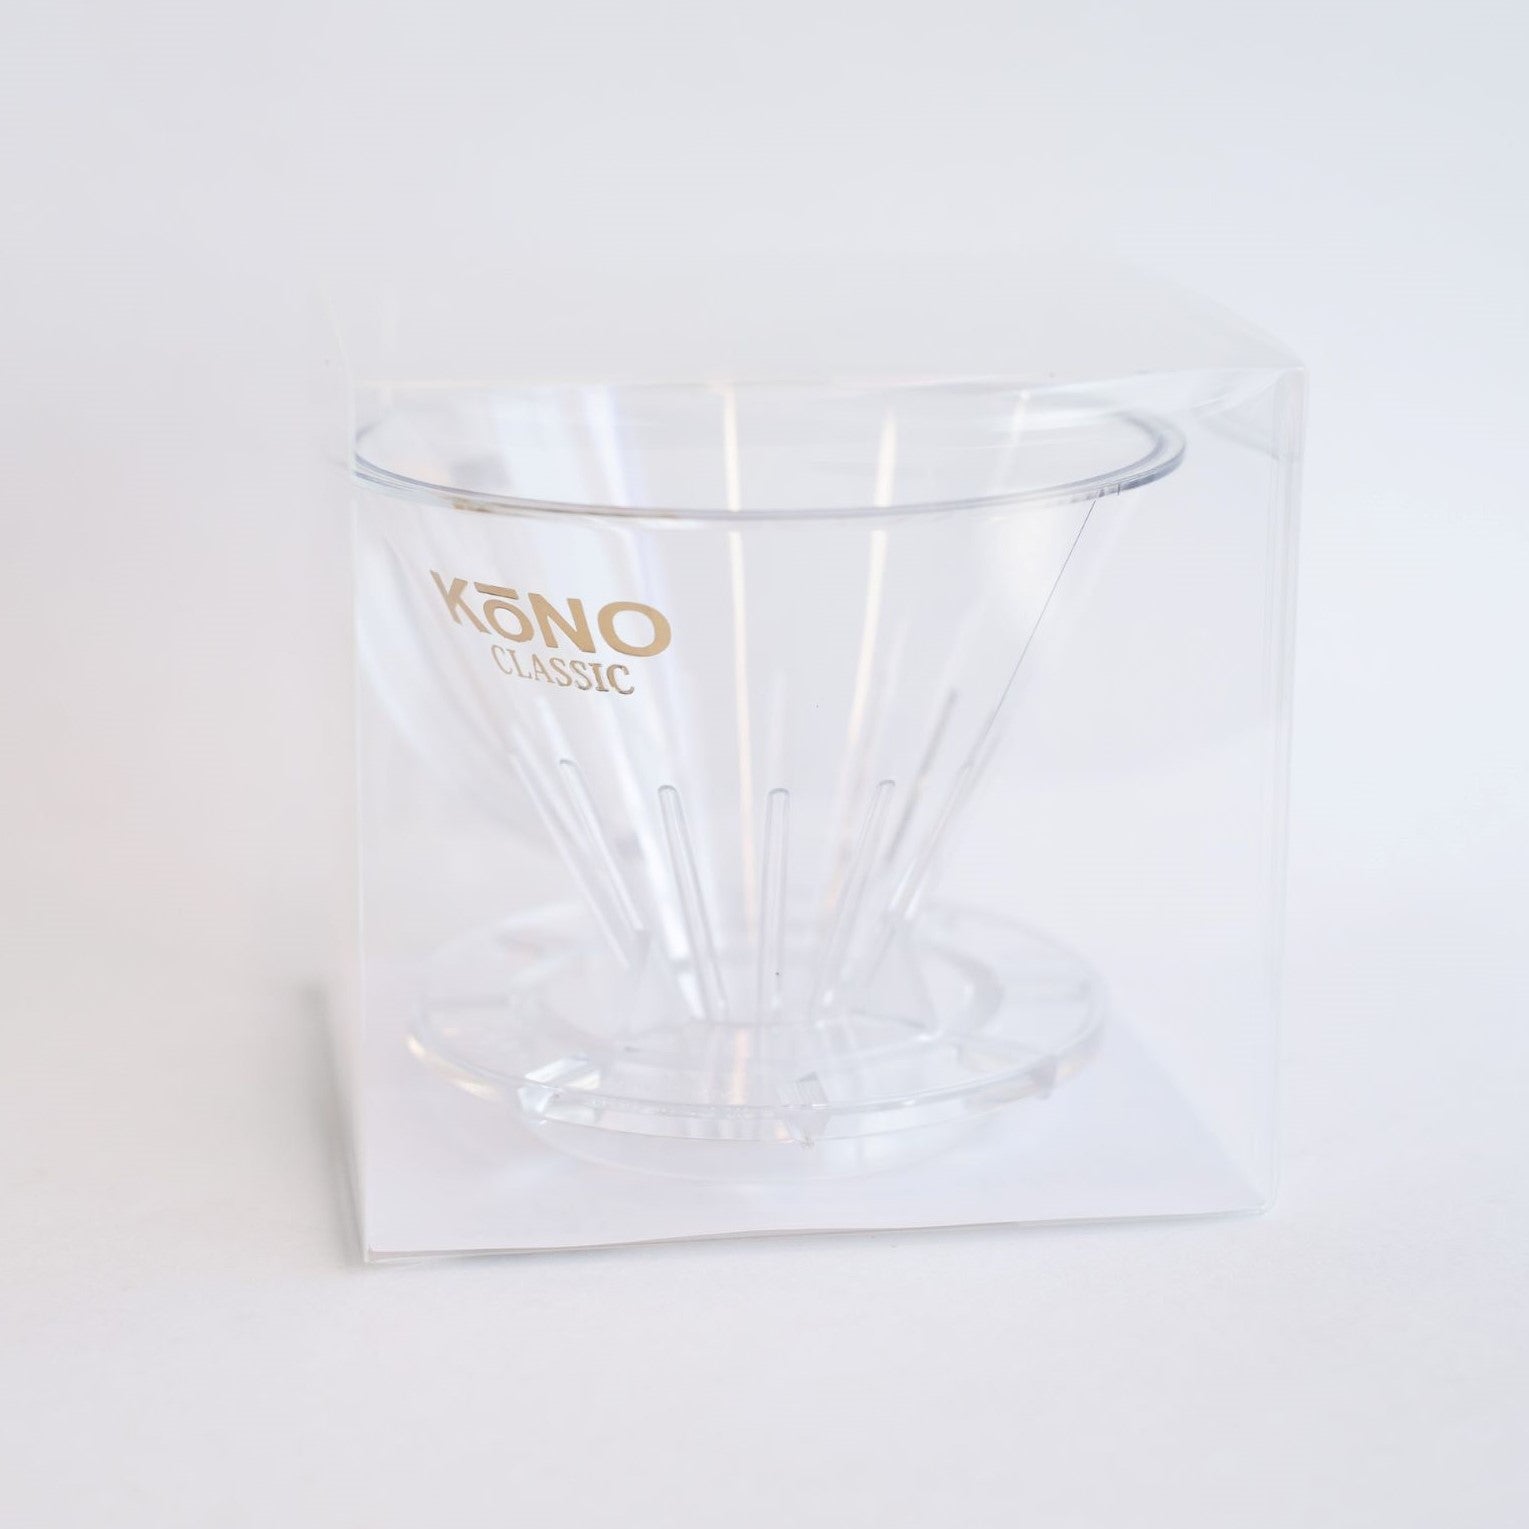 Kono - Meimon MD-41 Plastic Dripper Clear - 4 cup